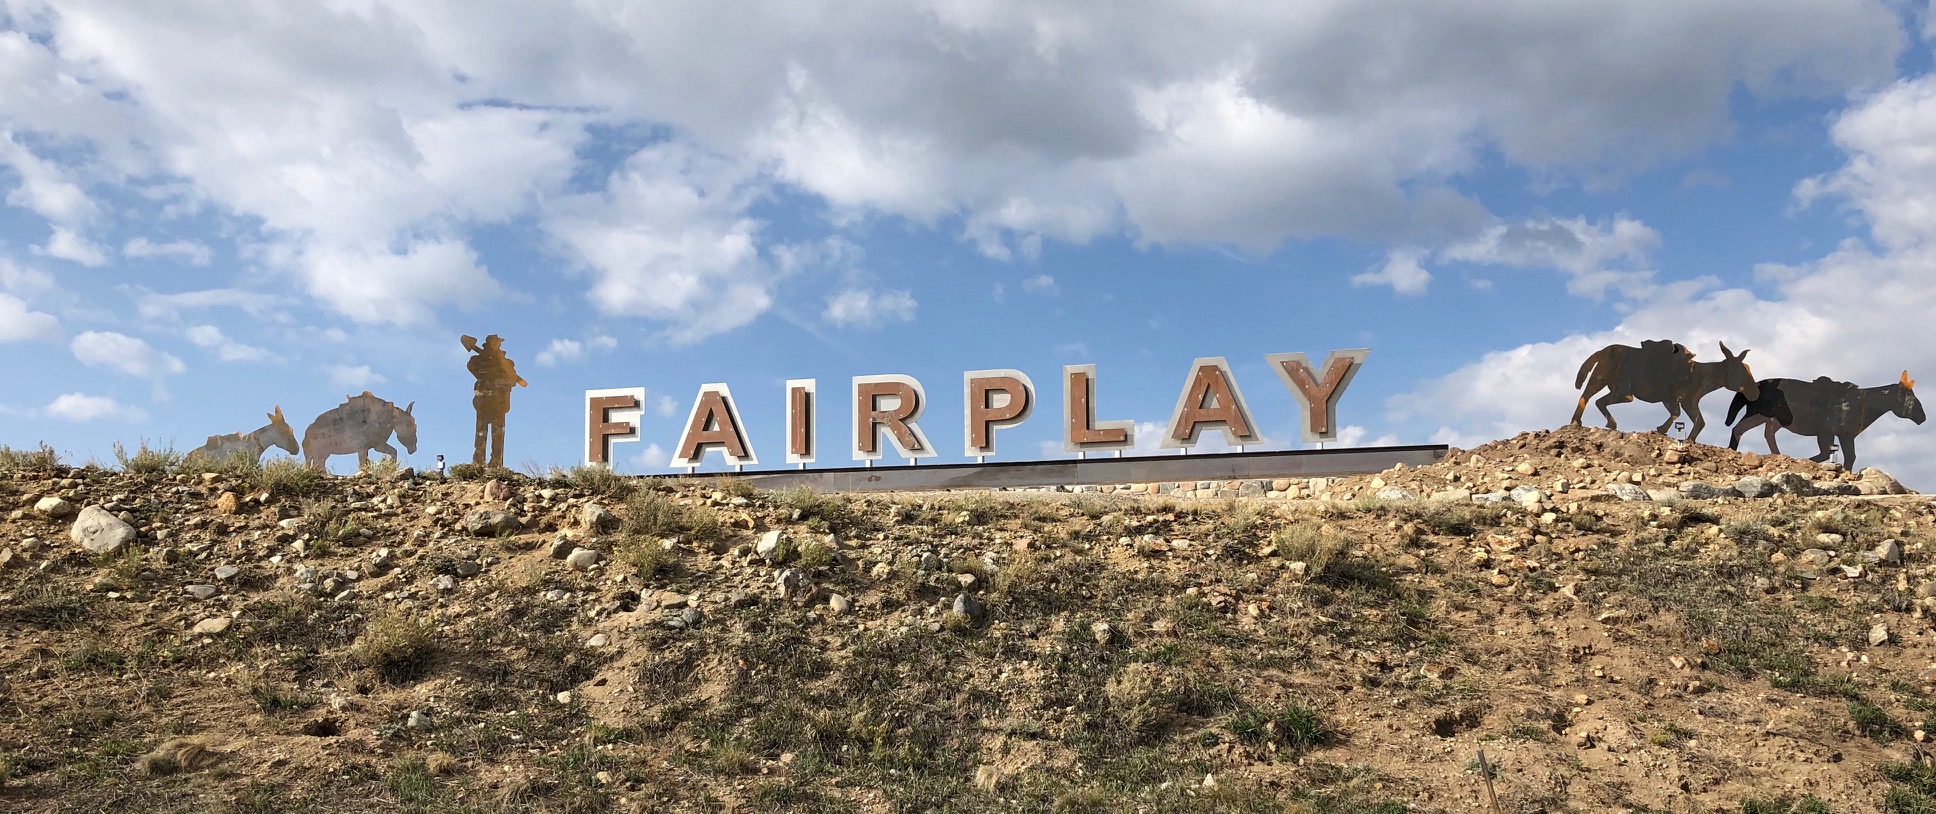 NEXT DOOR NEIGHBORS – Fairplay Colorado